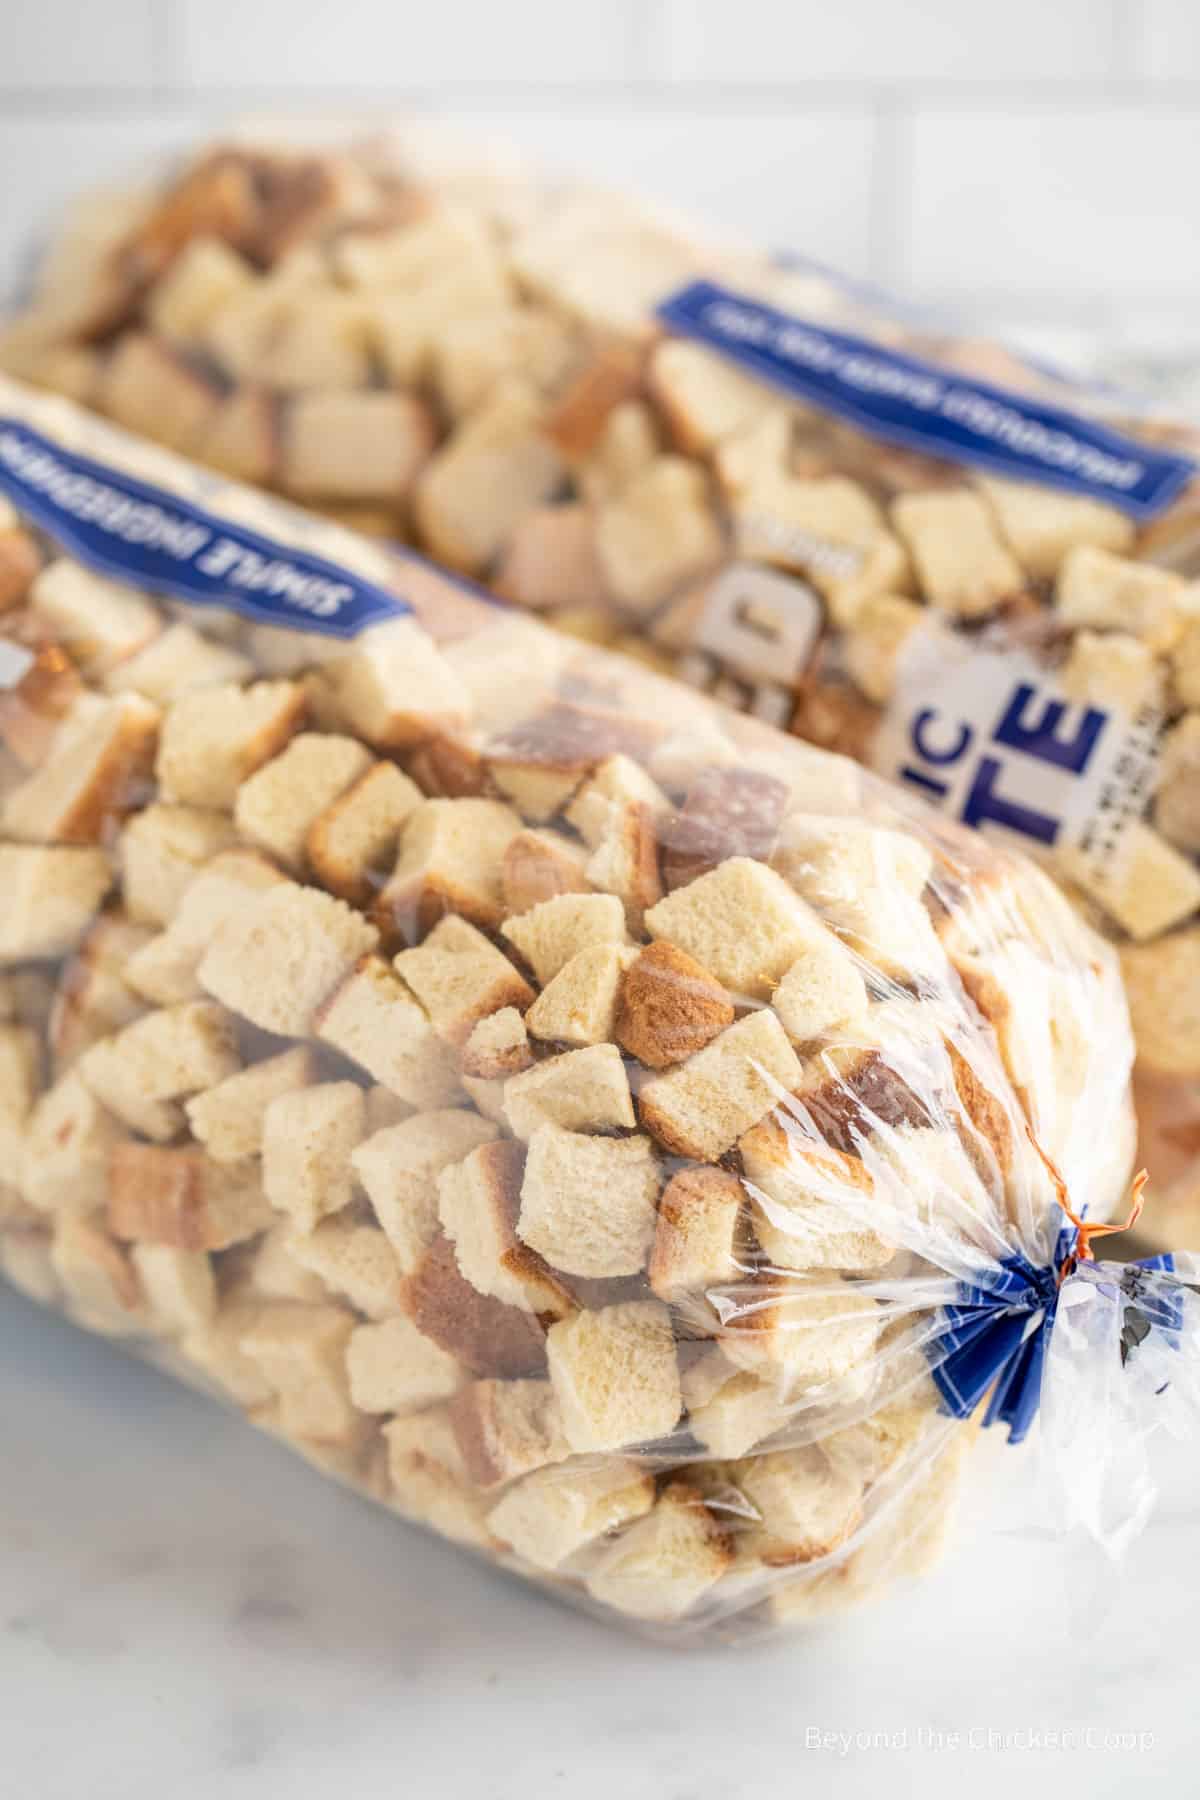 Bread crumbs in plastic bags. 